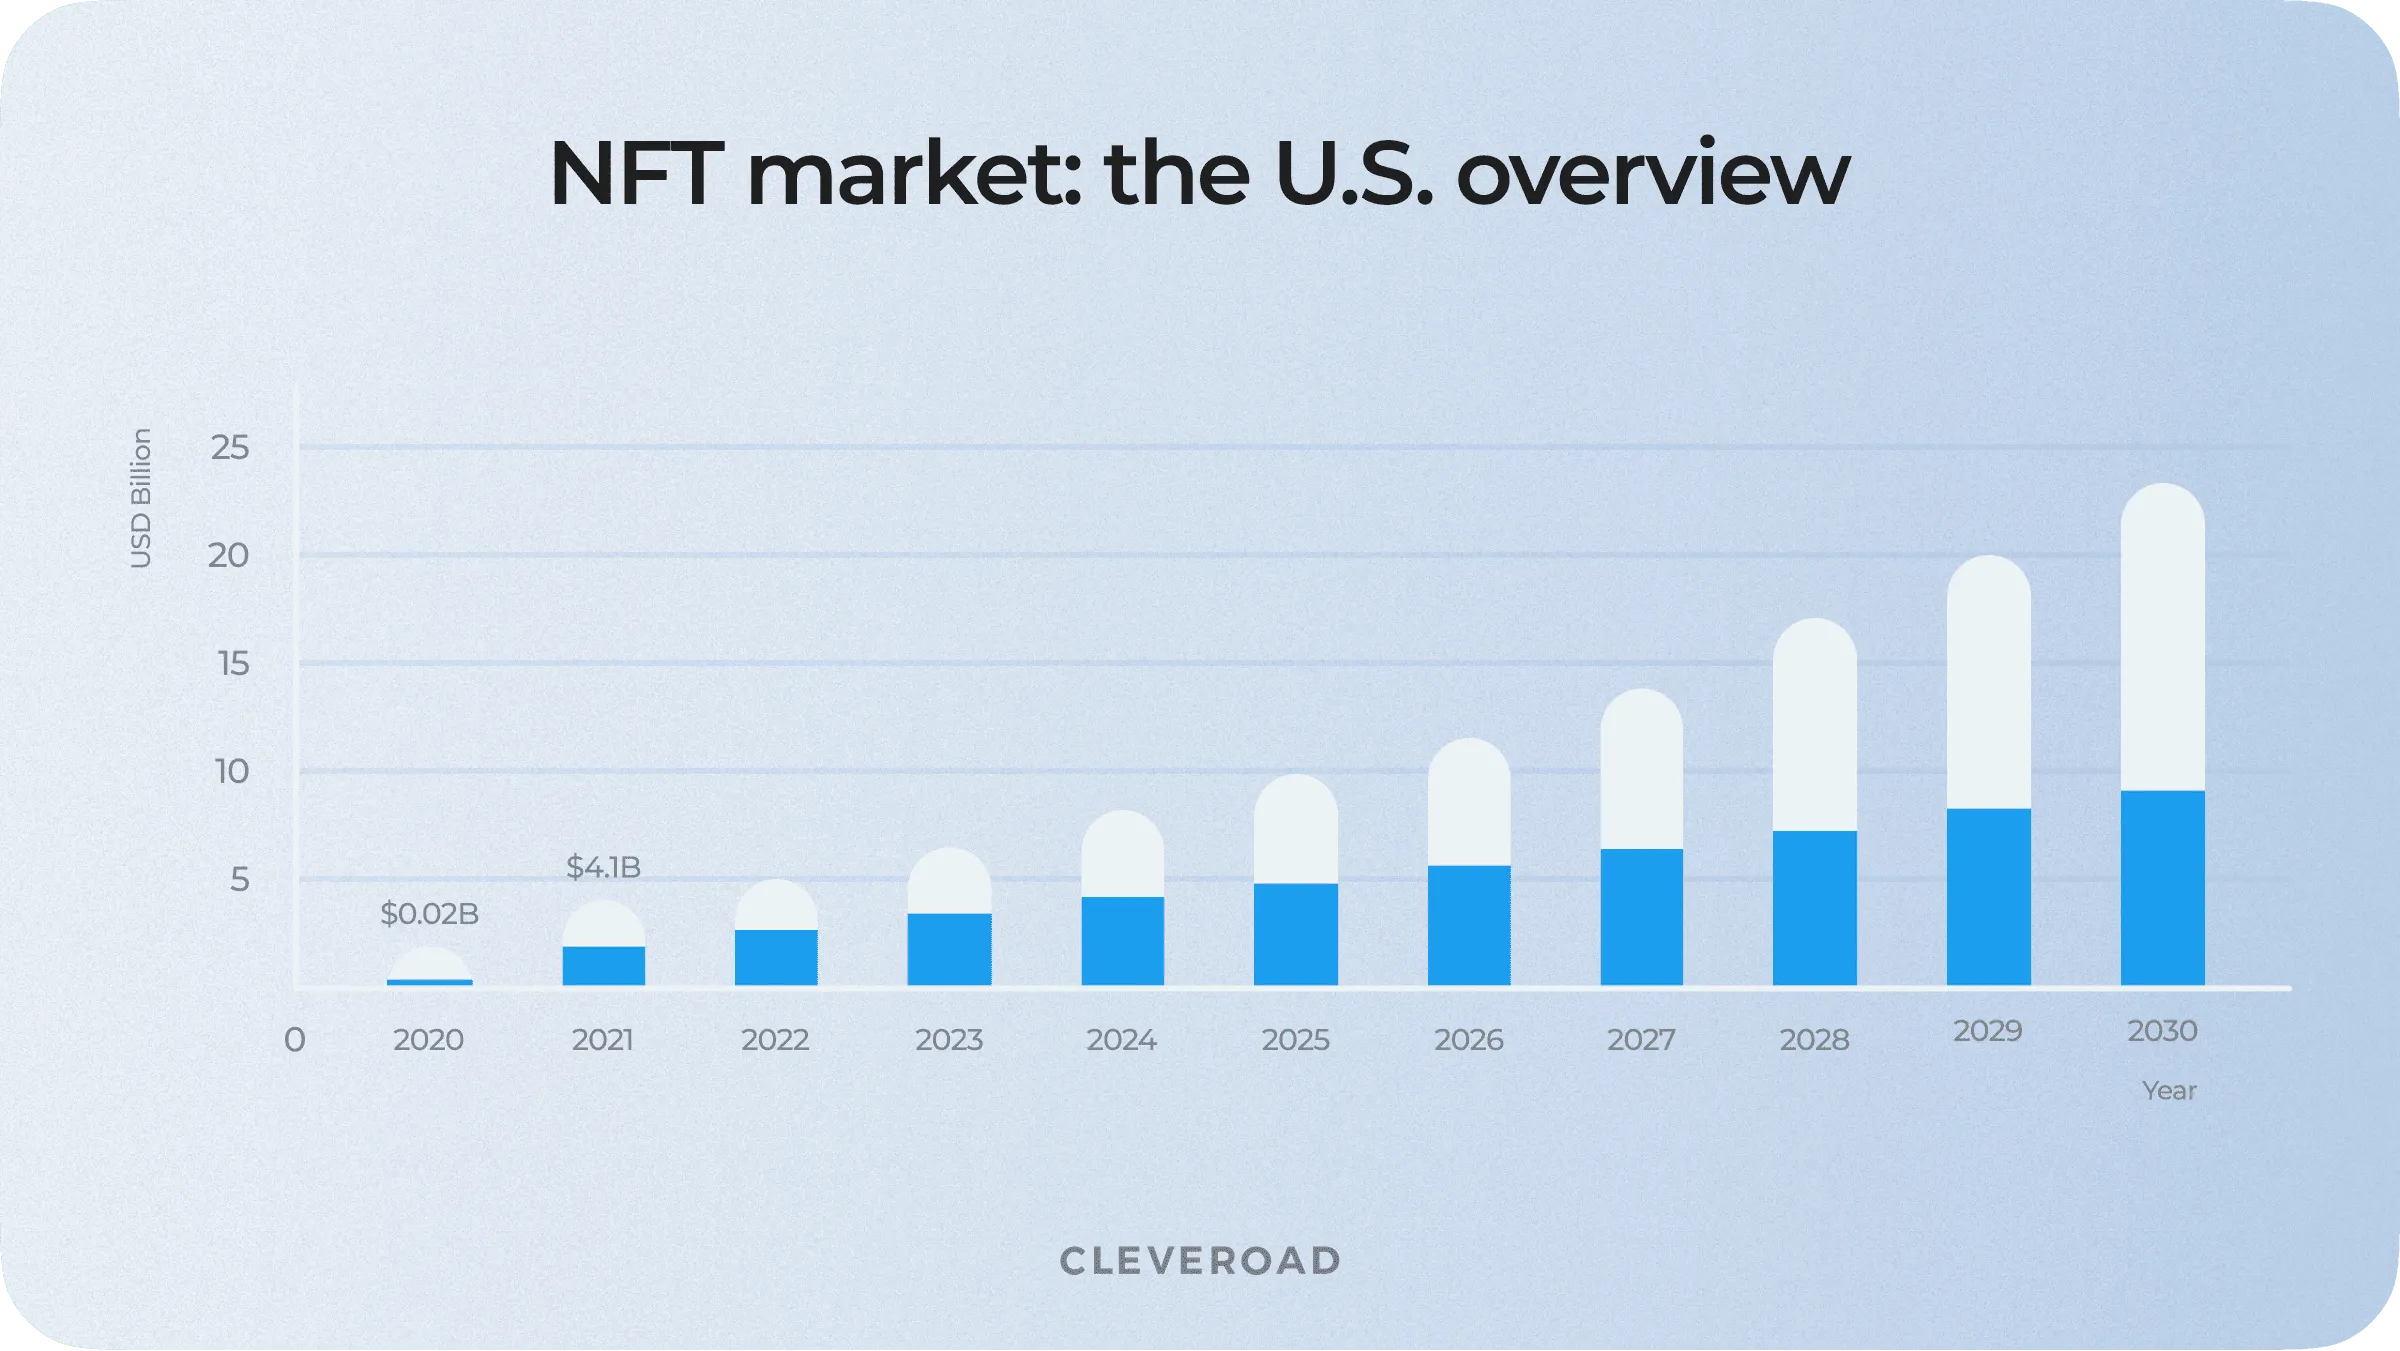 NFT market insights in the U.S.